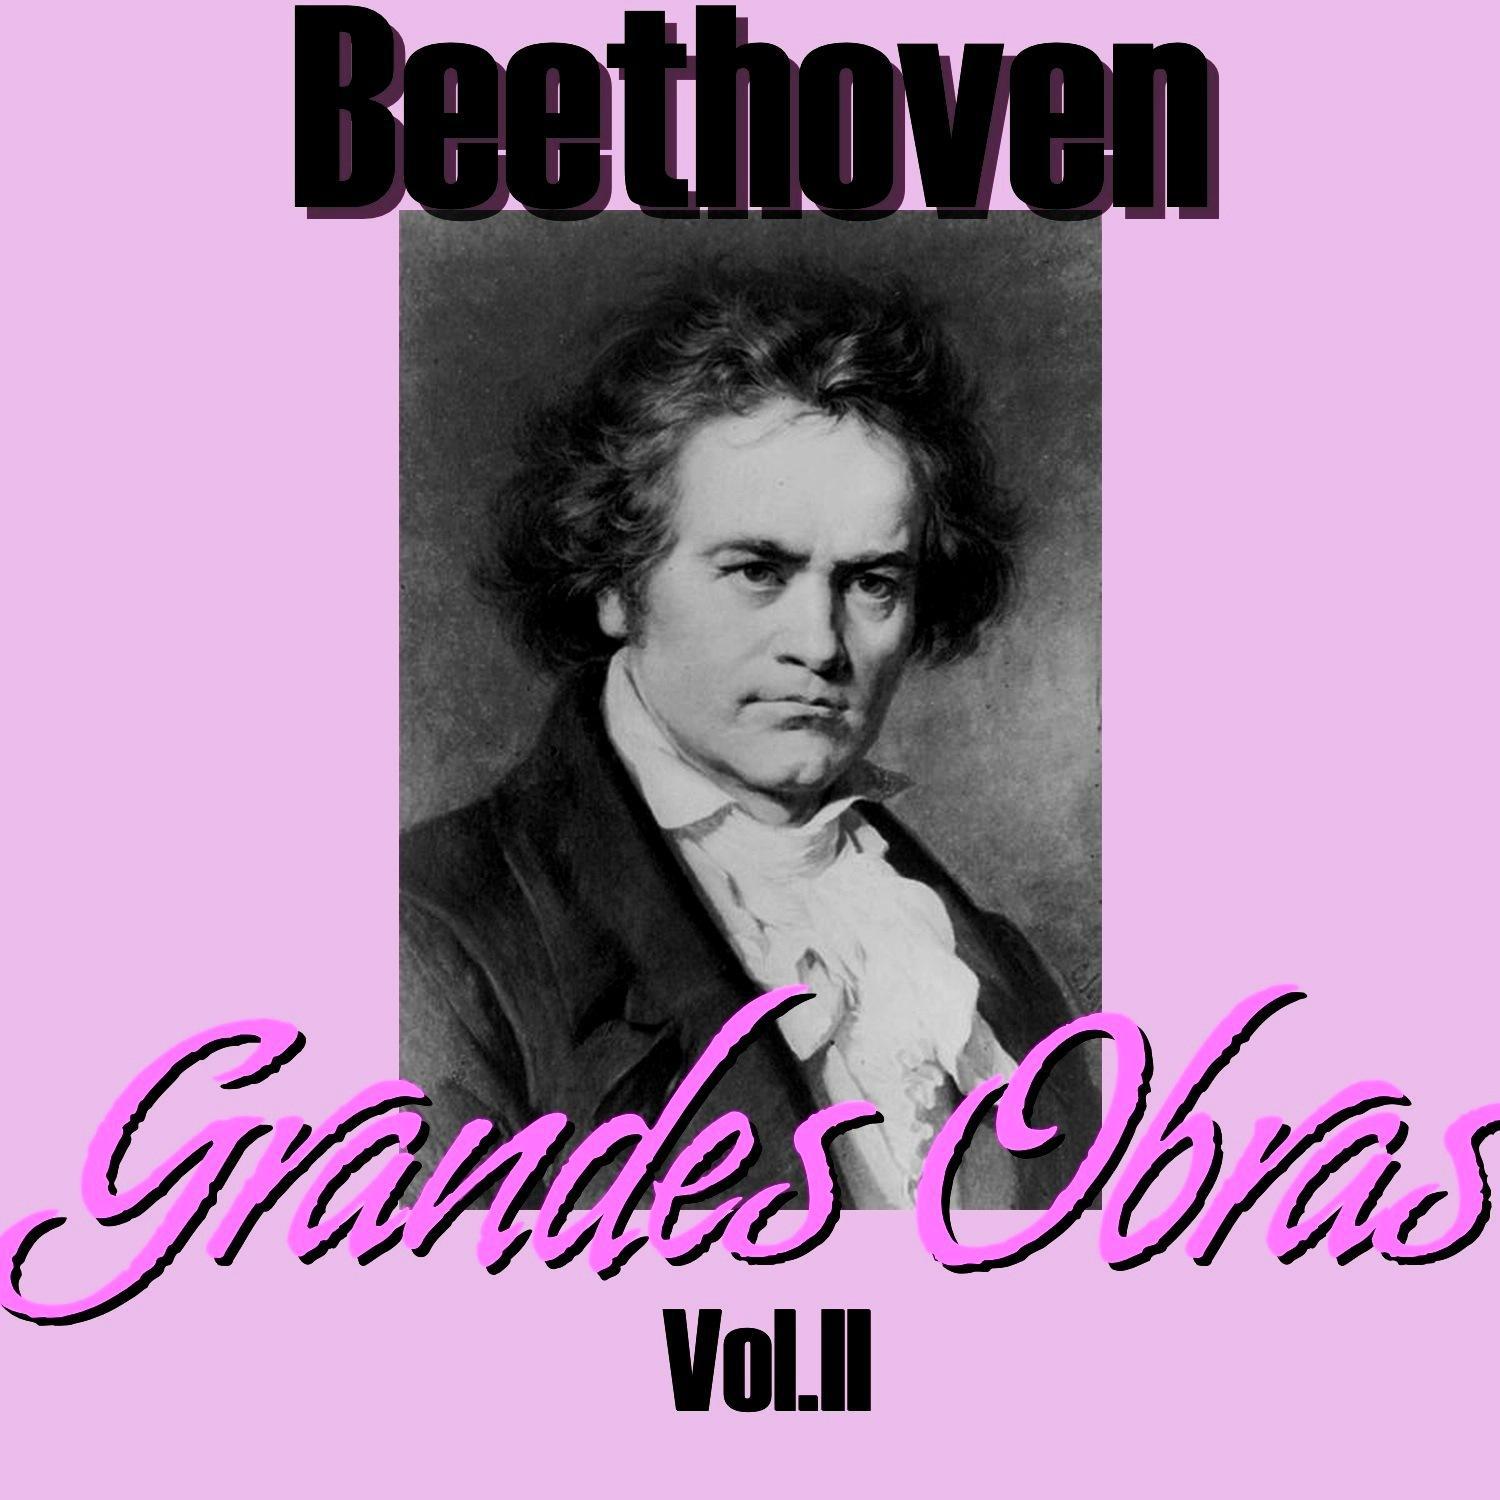 Beethoven Grandes Obras Vol.II专辑